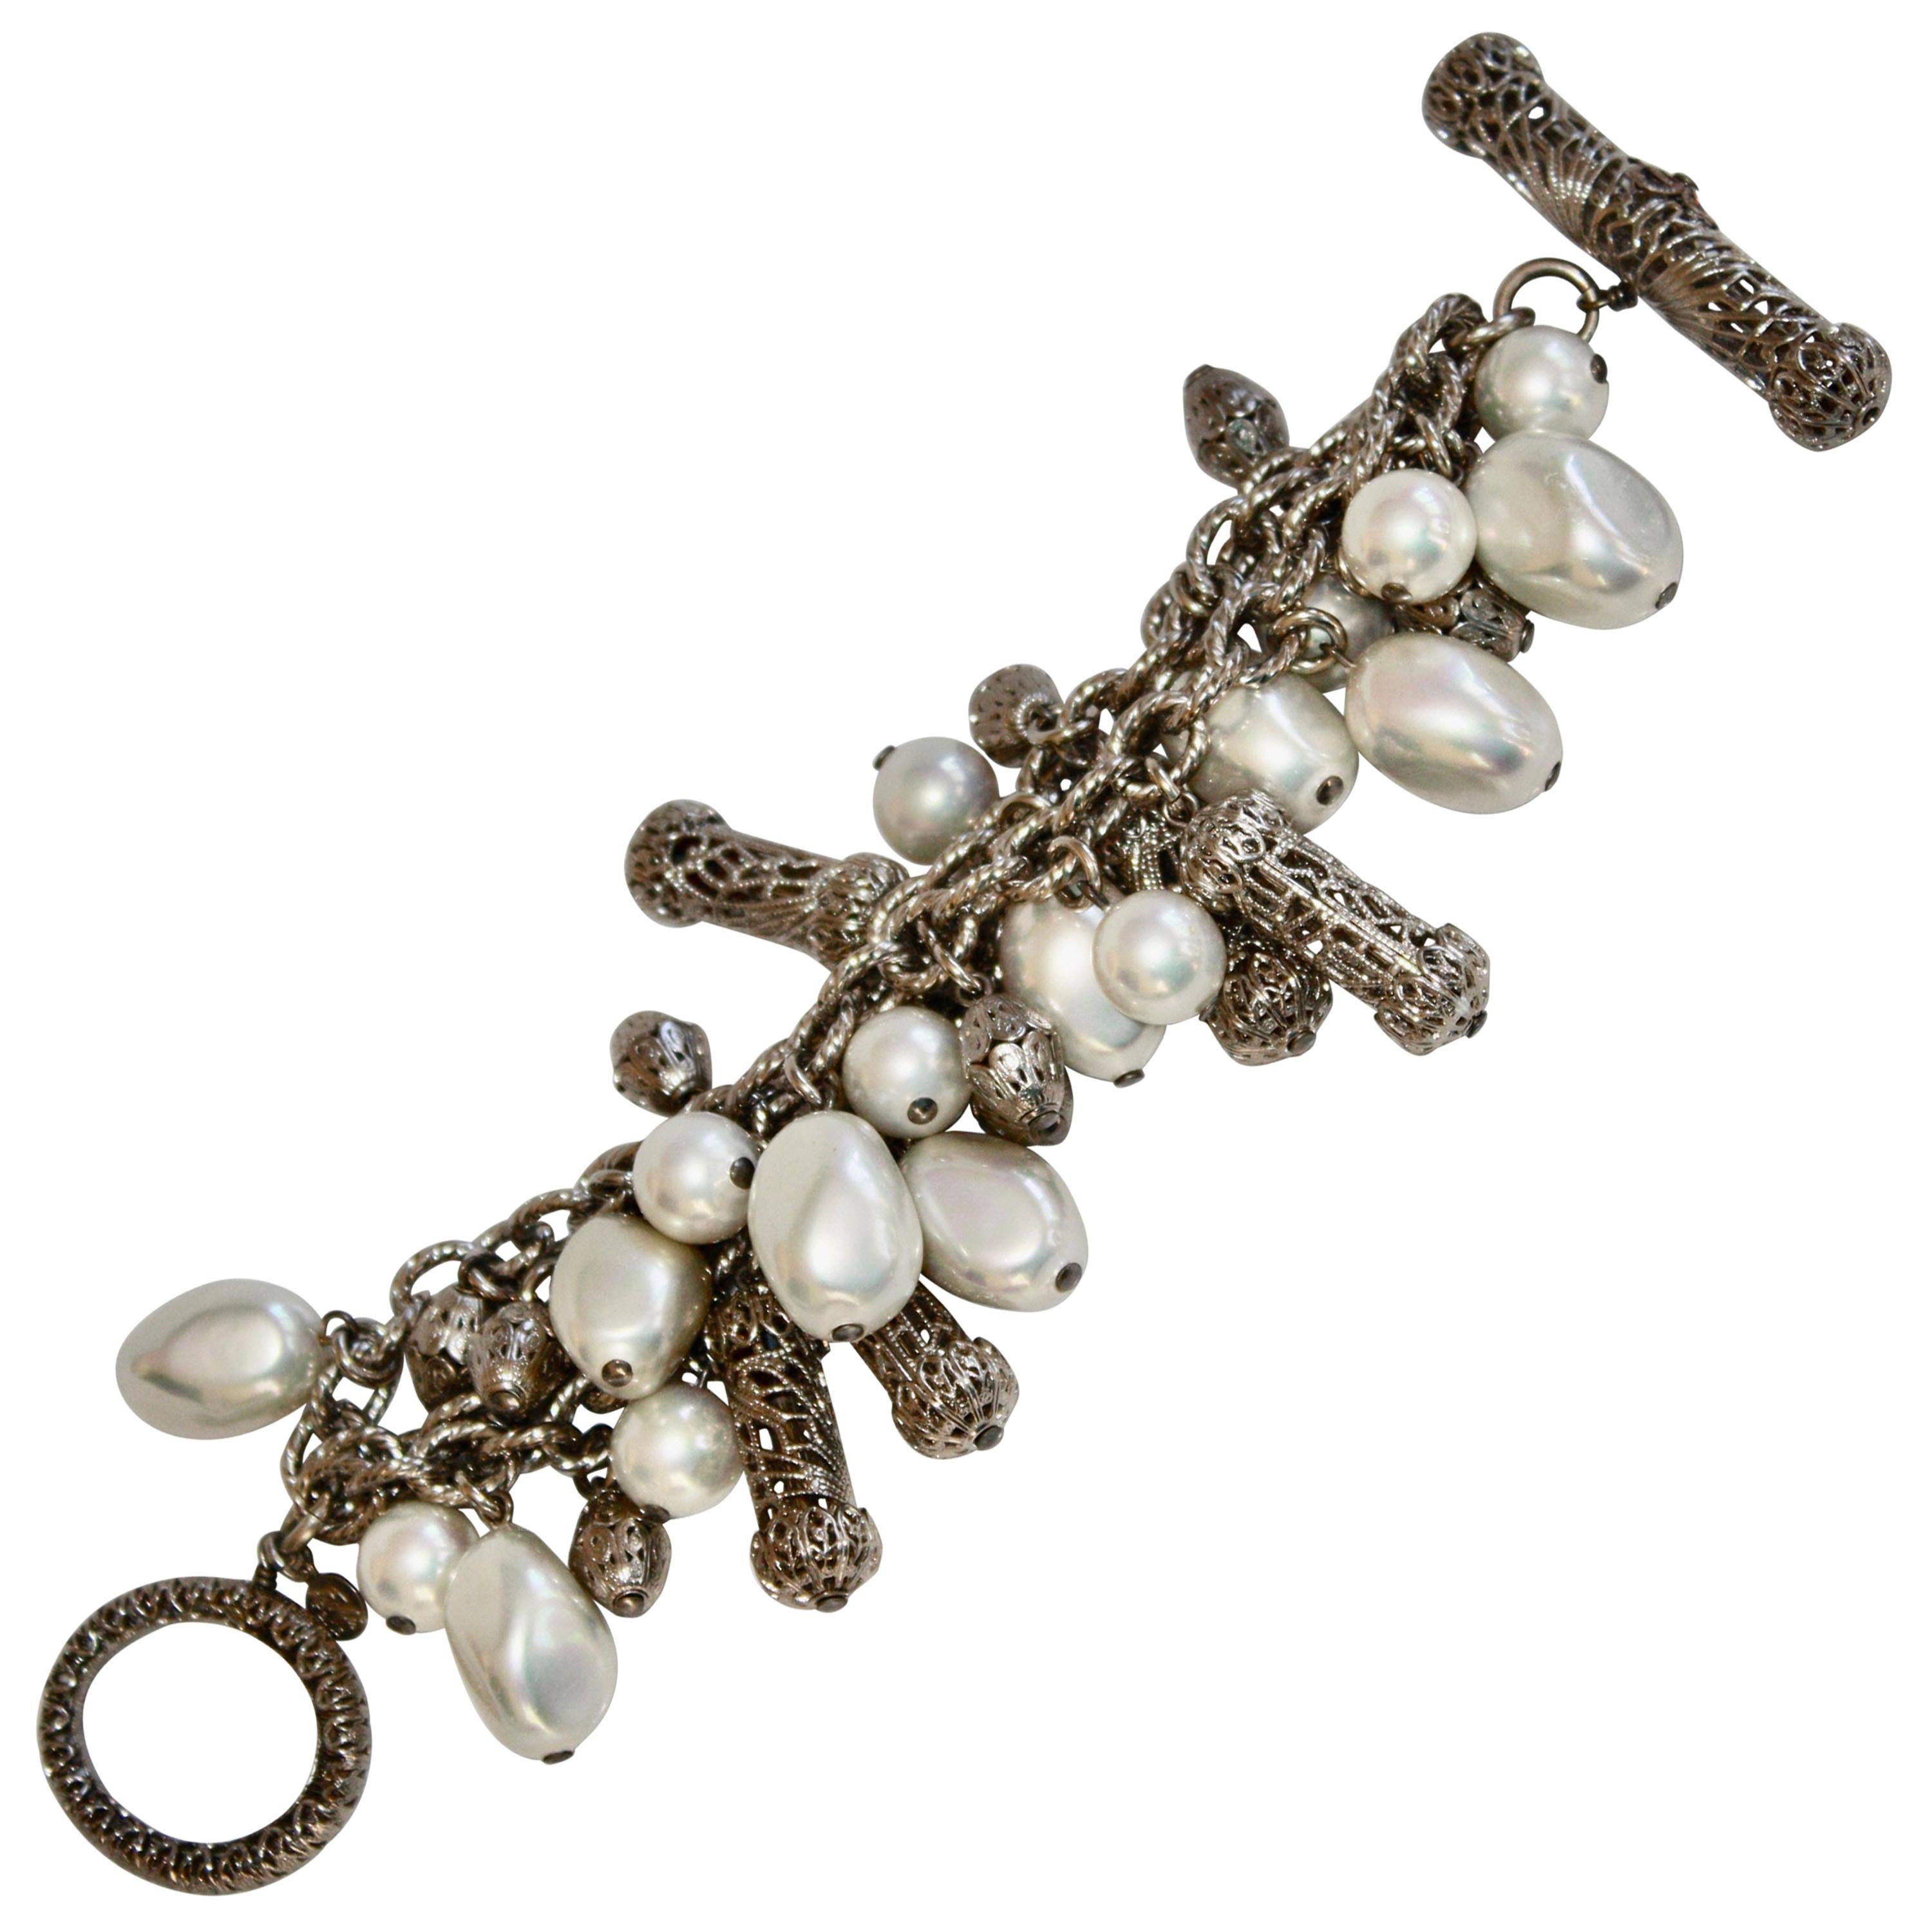 Francoise Montague Rhodium and Pearls Charm Bracelet